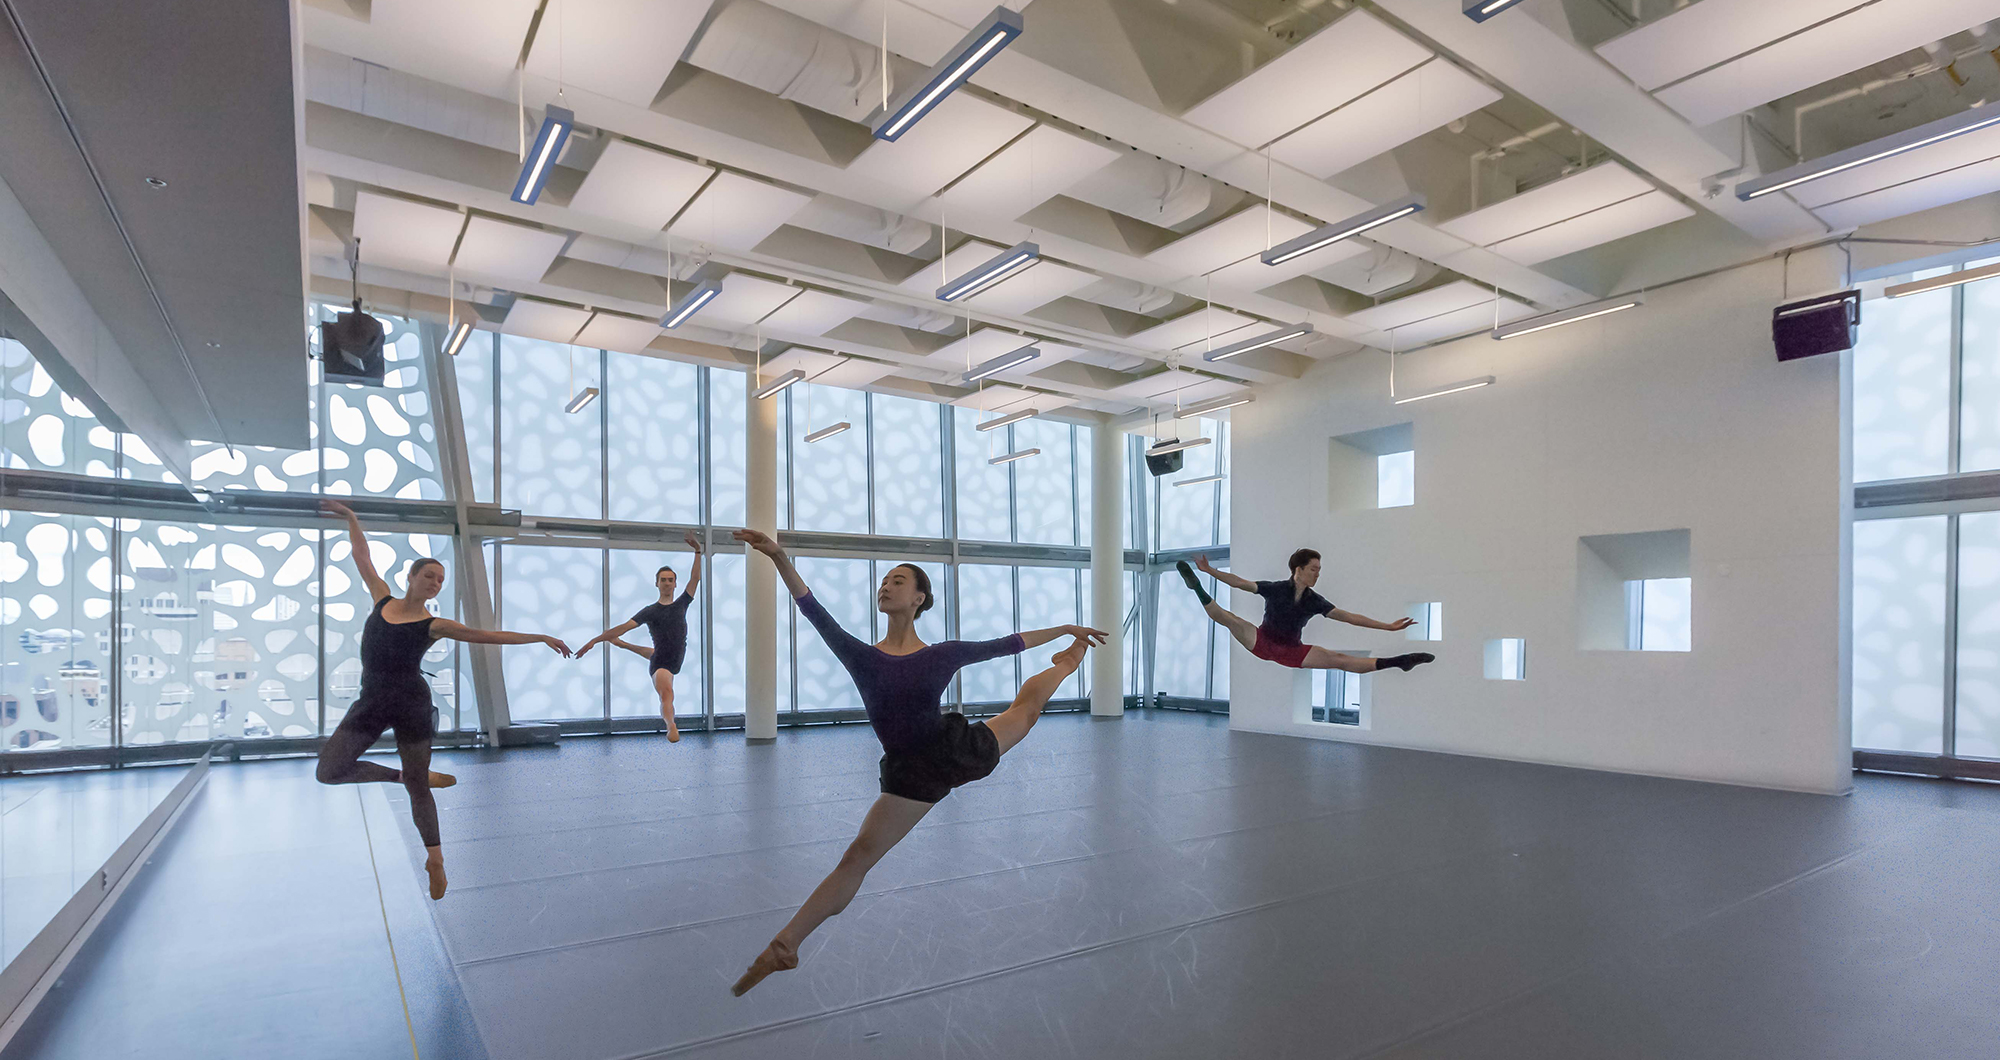 Dance studio with beautiful Solera panels diffusing natural light throughout.